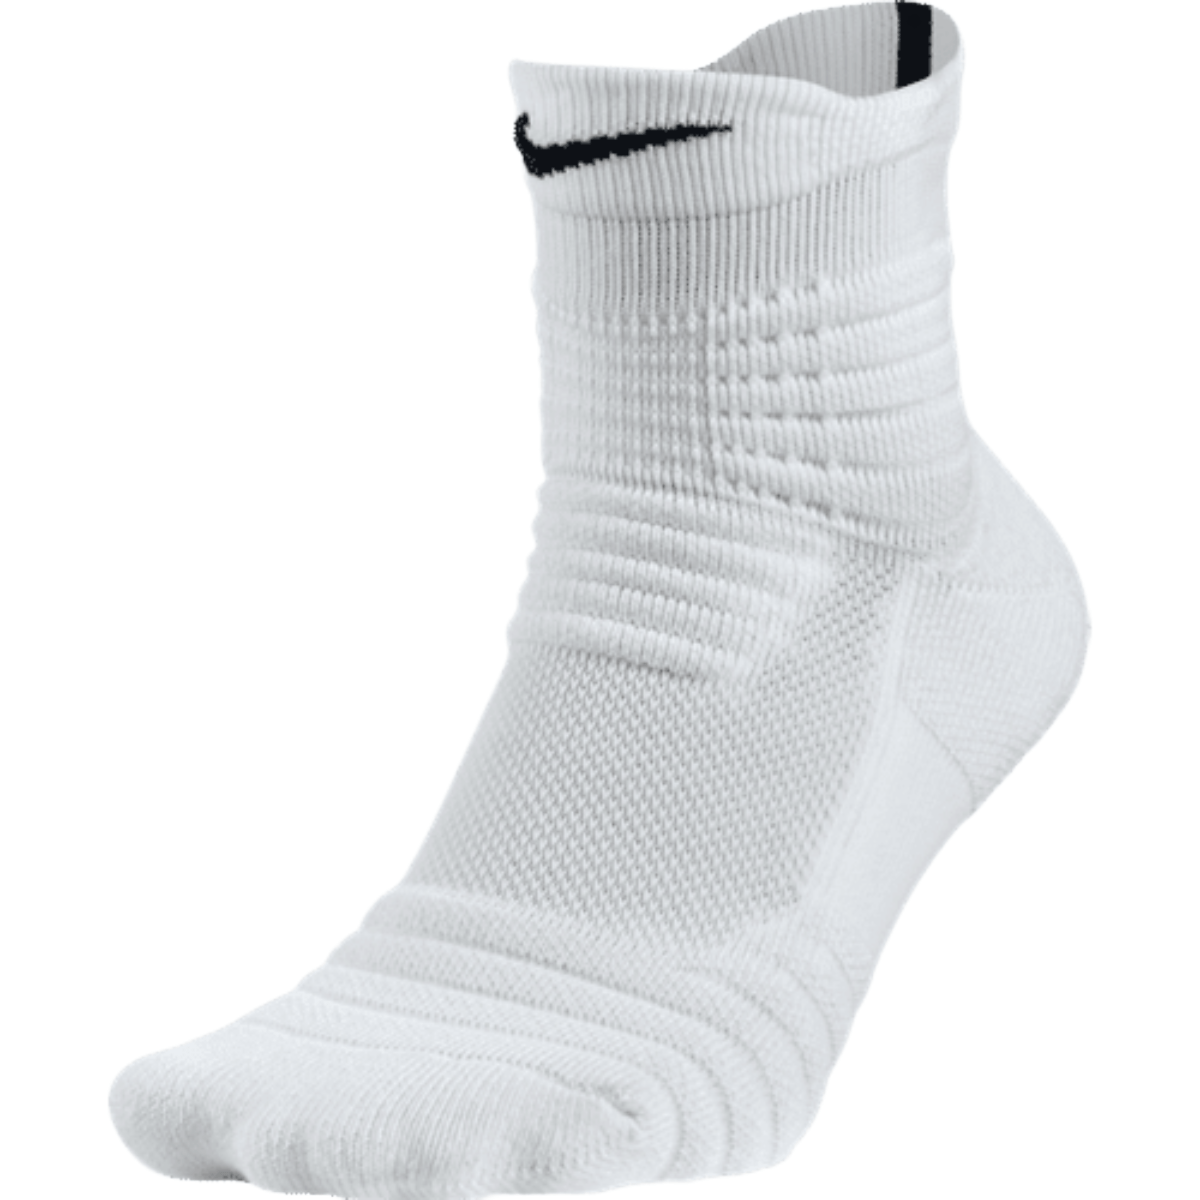 Nike Elite Versatility High Quarter Crew Sock - Men's 